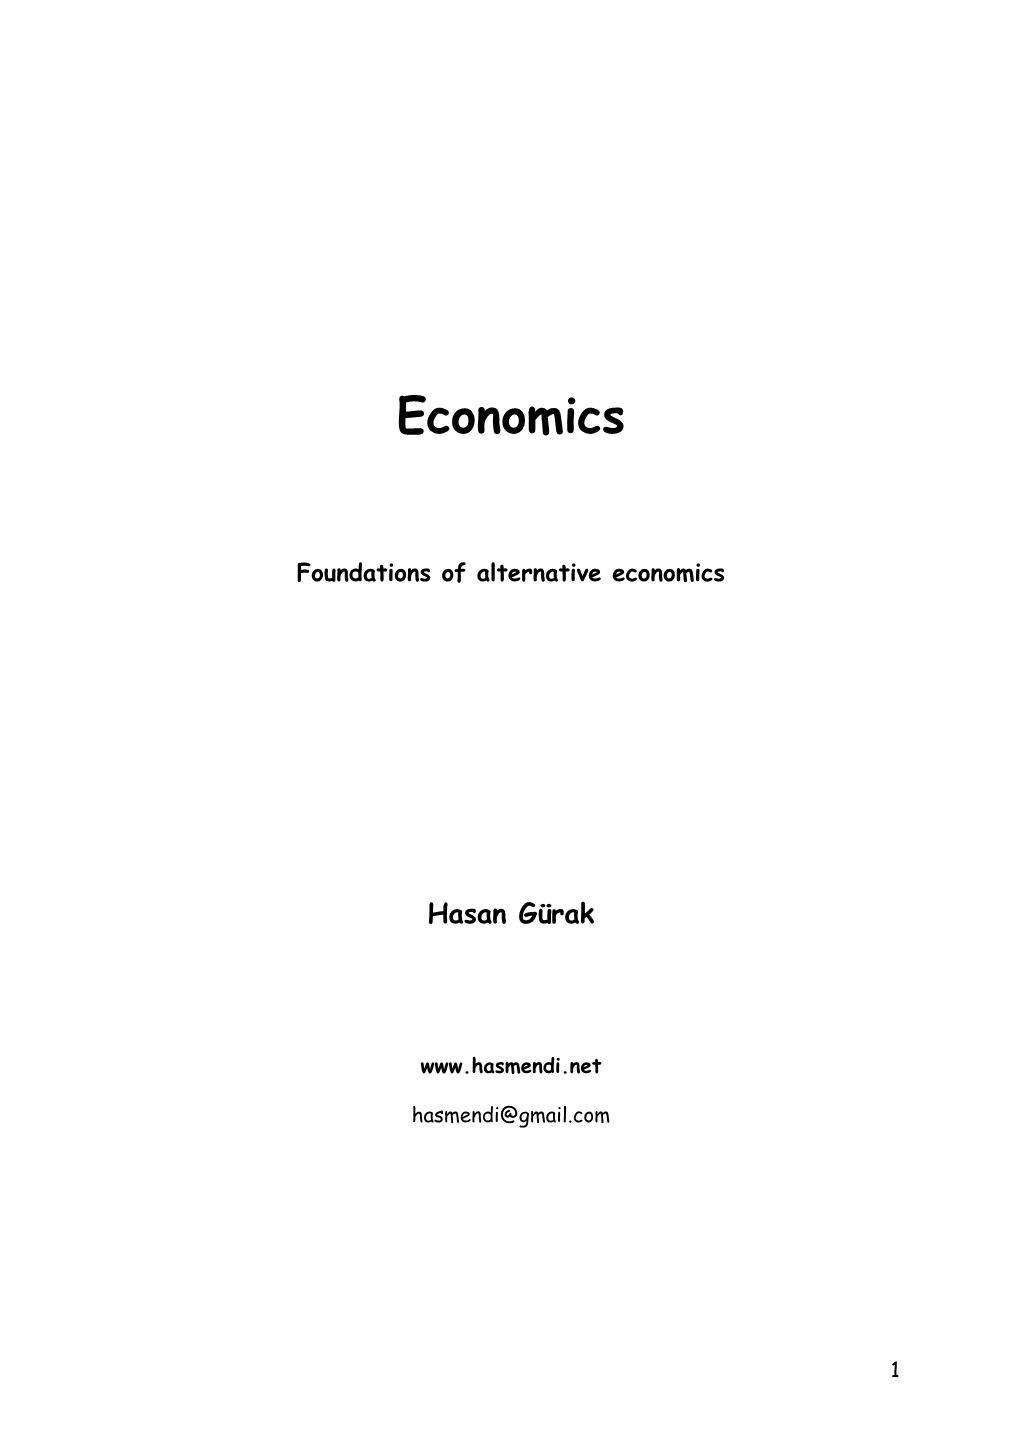 Foundations of Alternative Economics